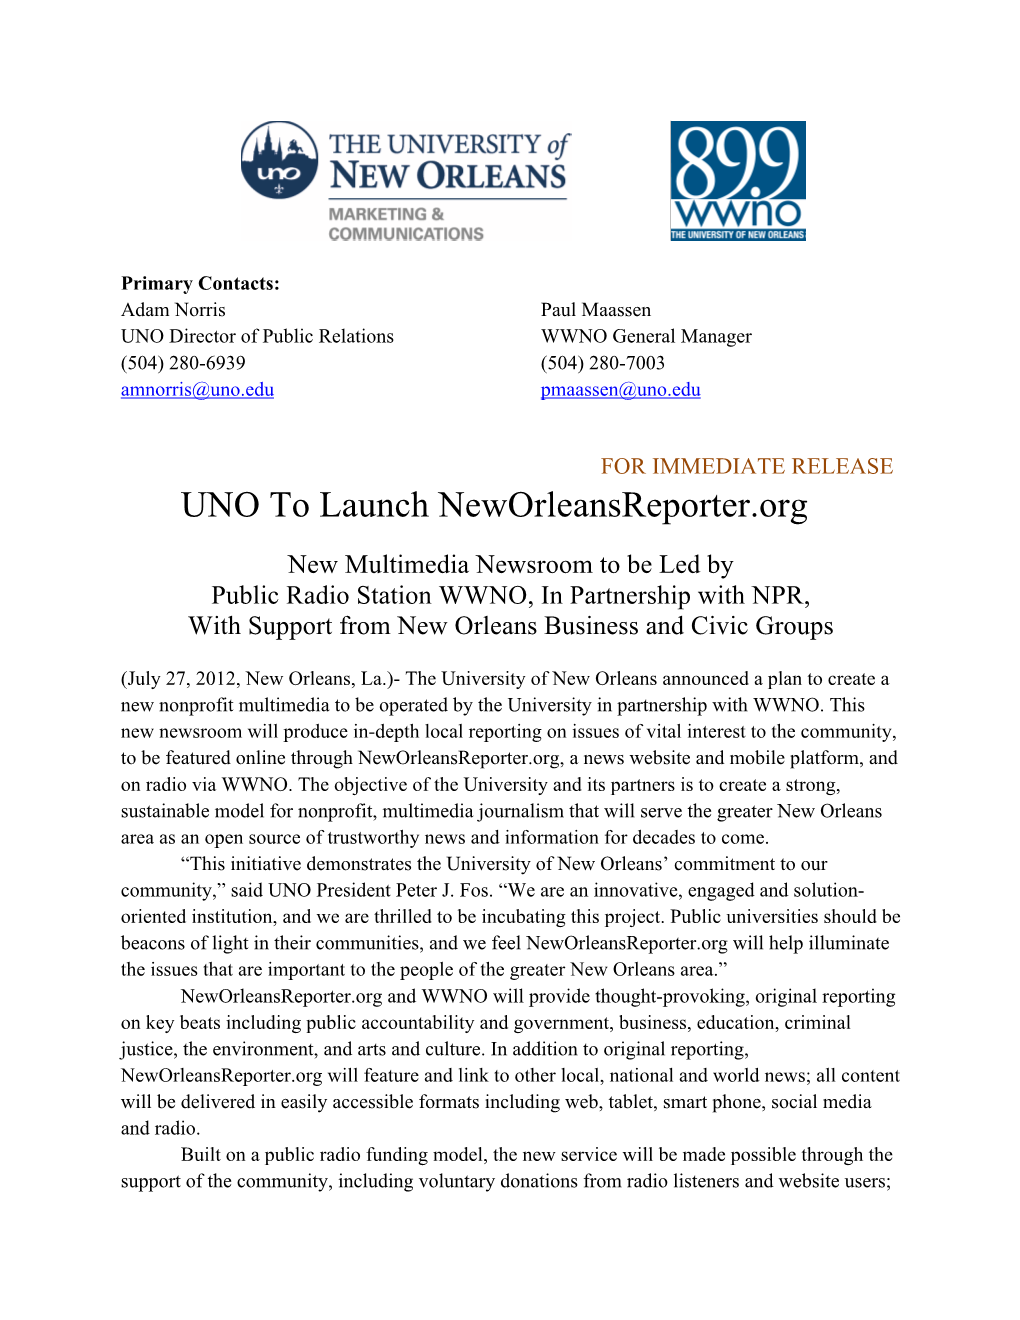 UNO to Launch Neworleansreporter.Org